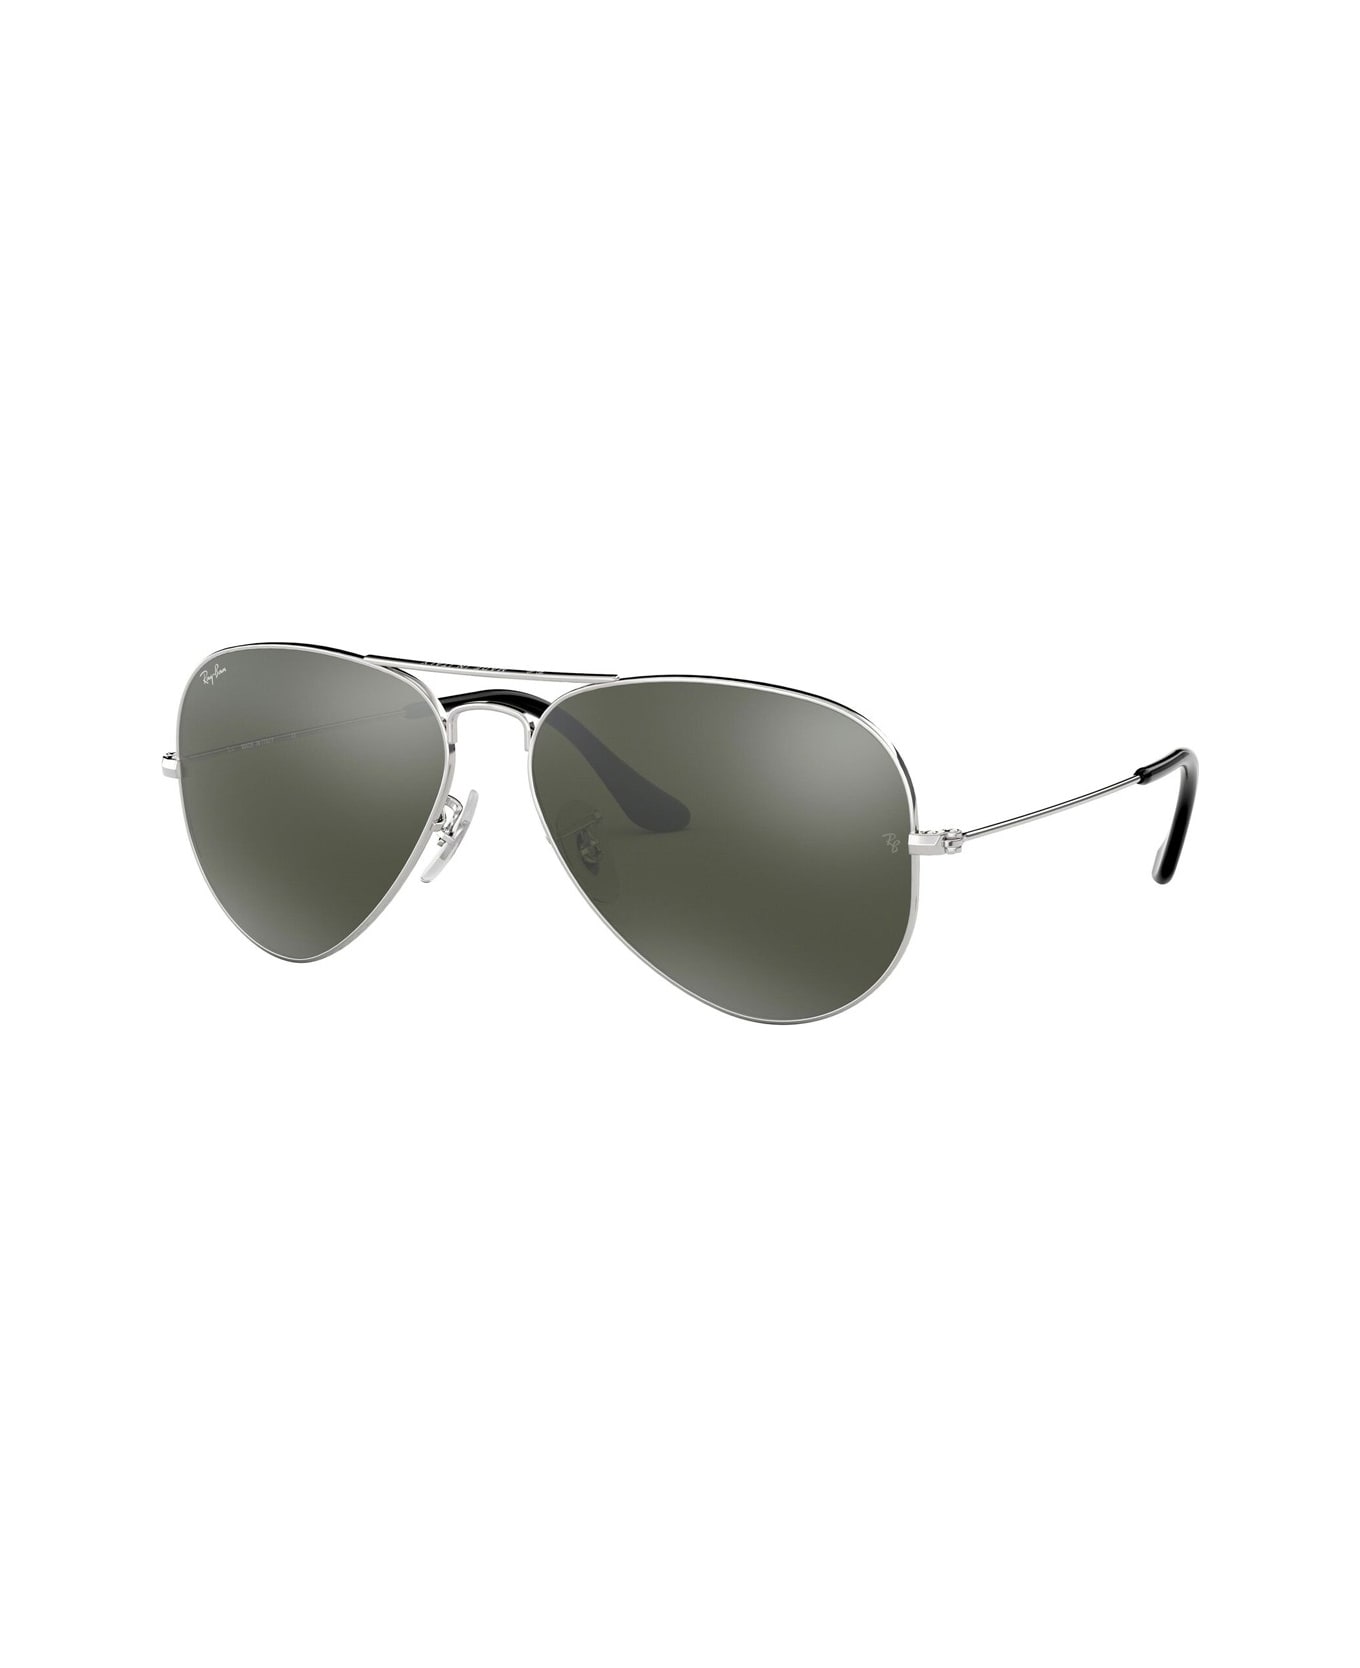 Ray-Ban Aviator 3025 Sunglasses - Argento サングラス